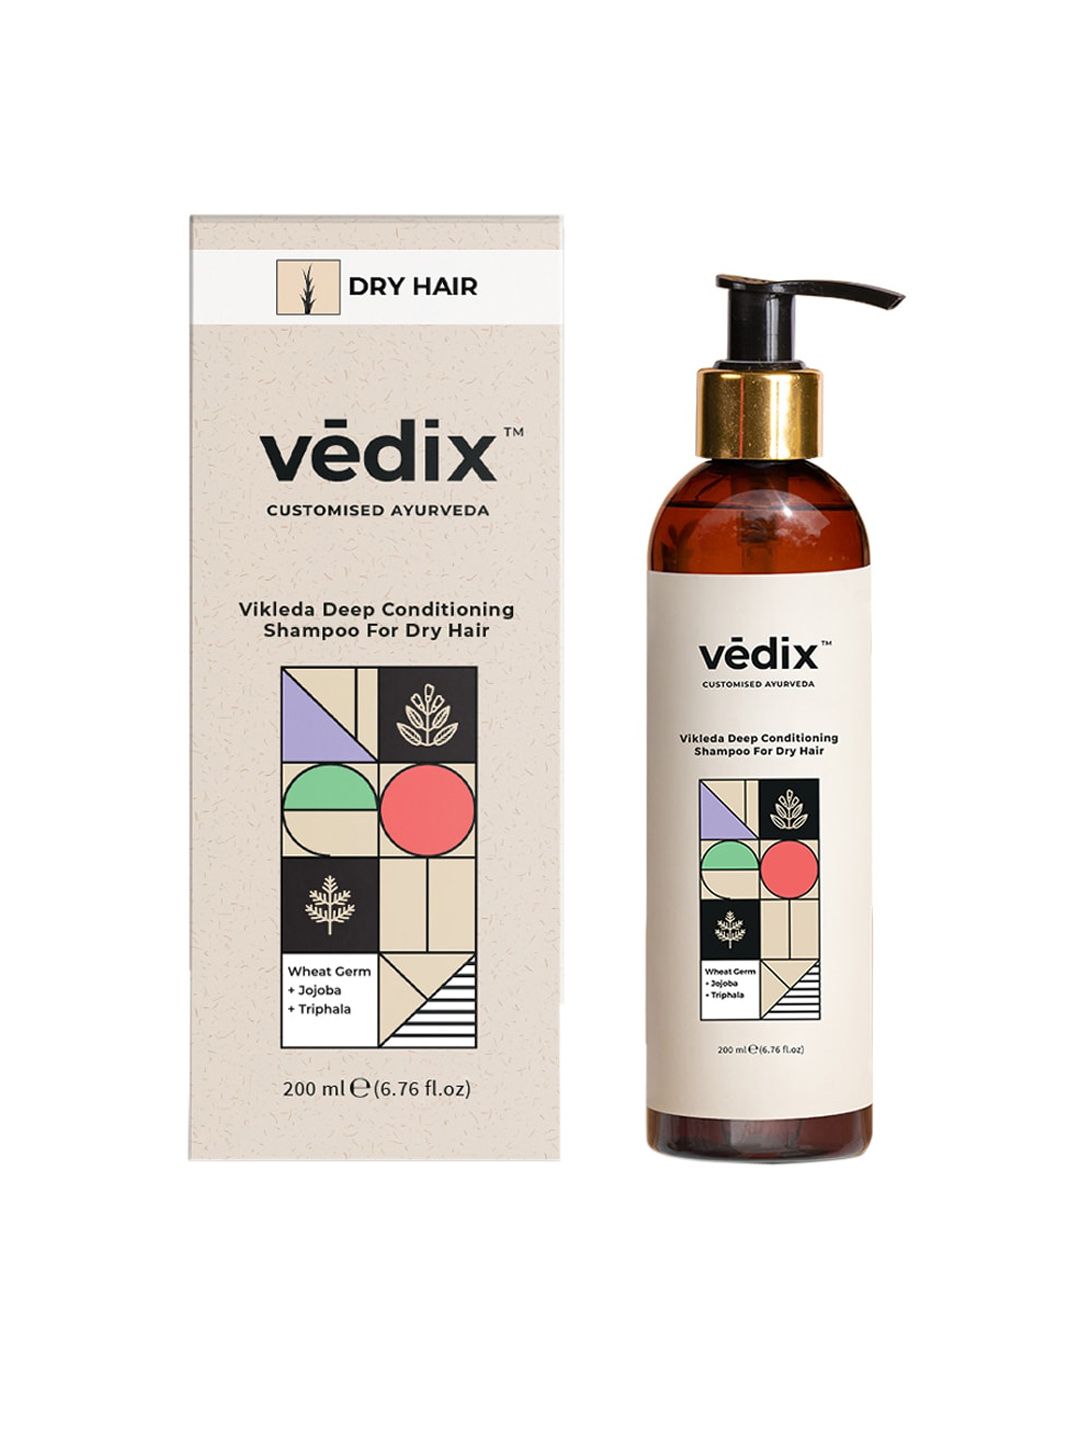 Vedix Women Customized Ayurvedic Vikleda Deep Conditioning Shampoo For Dry Hair-200ml Price in India